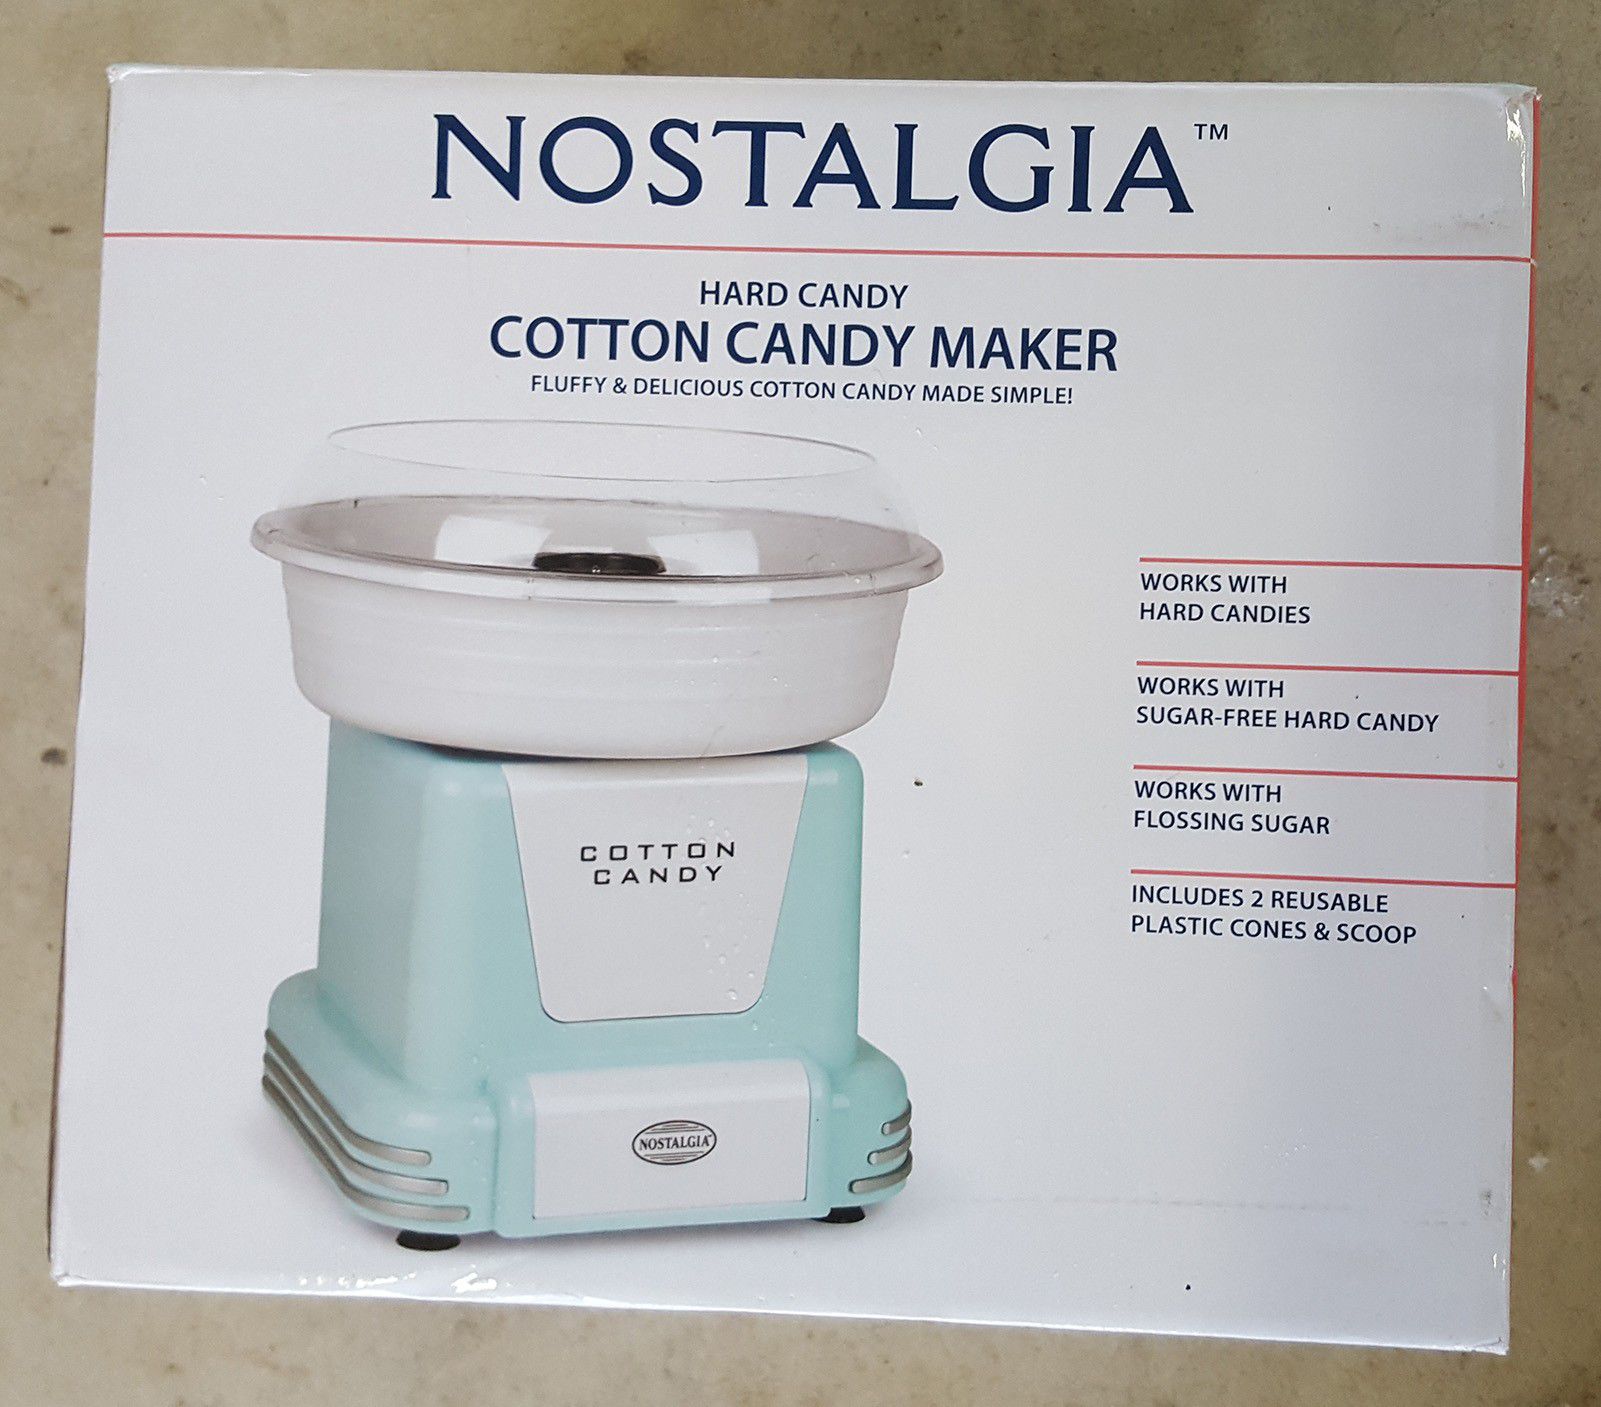 Cotton candy maker